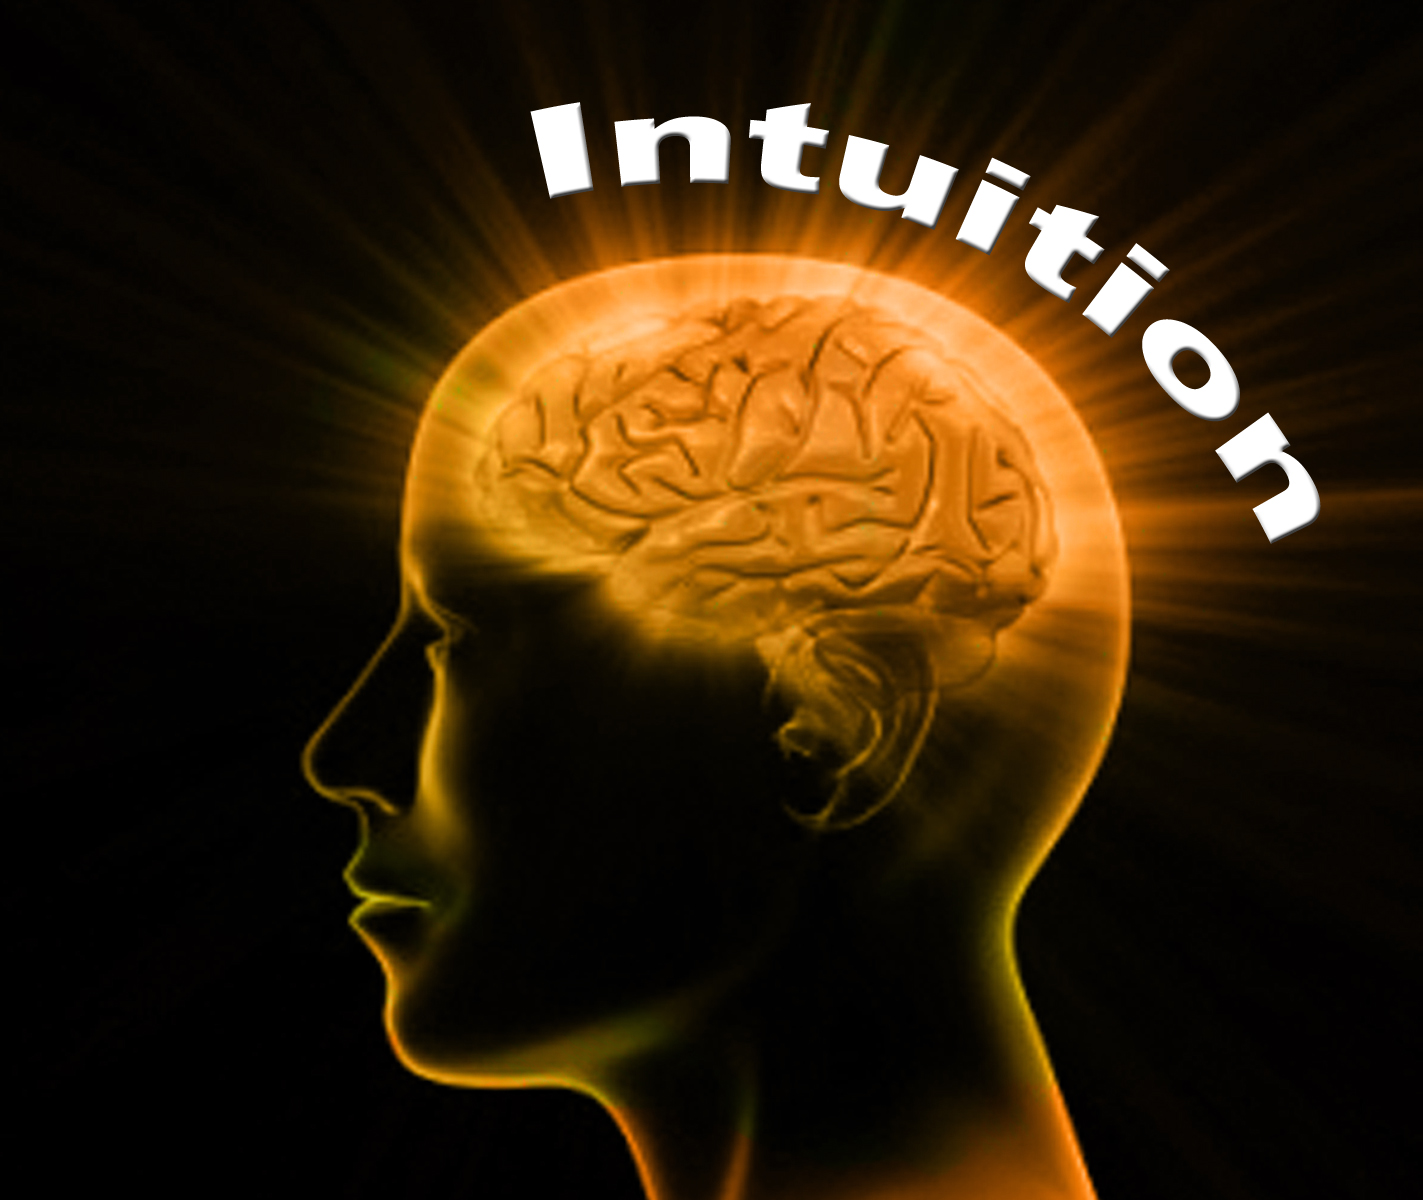 Без интуитивный. Интуиция. Интуиция фото. Интуиция иллюстрация. Что такое интуиция человека.